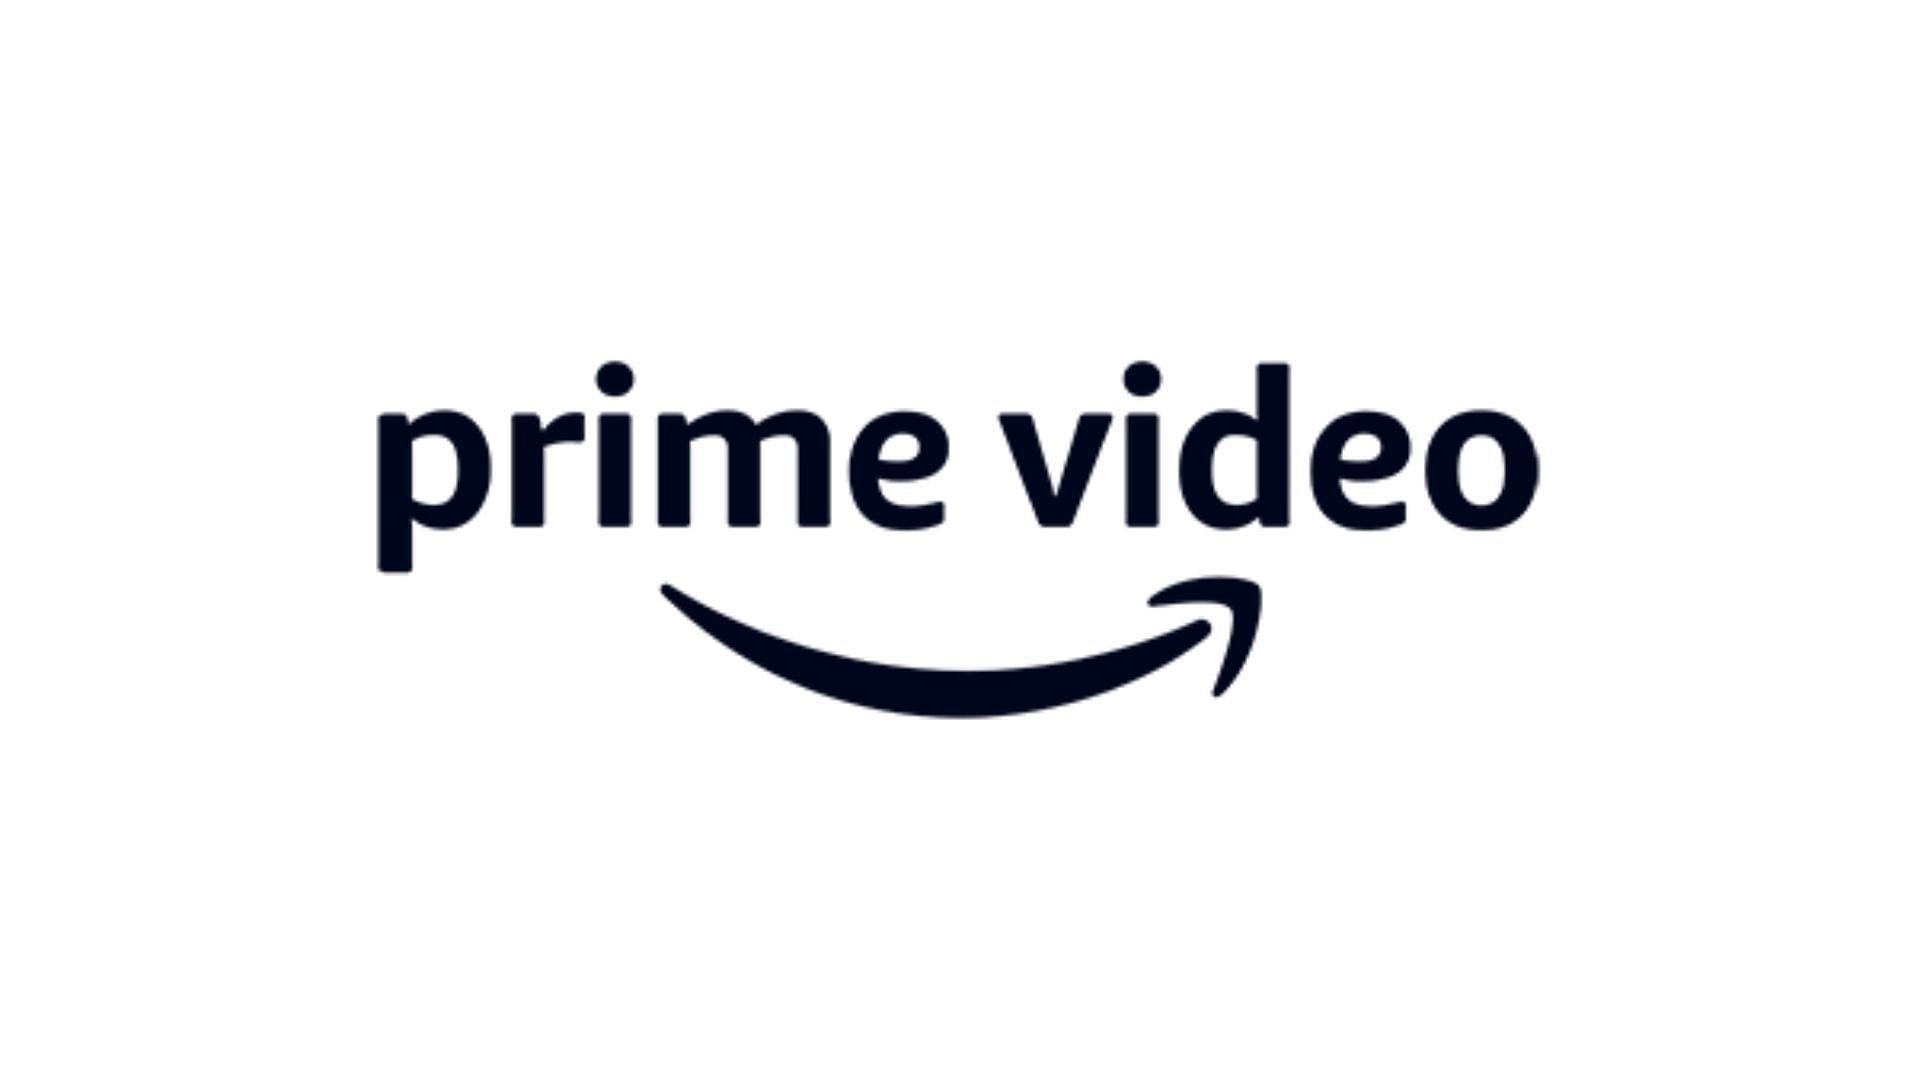 Amazon is finally giving Prime Video an overhaul (Image via Prime Video)